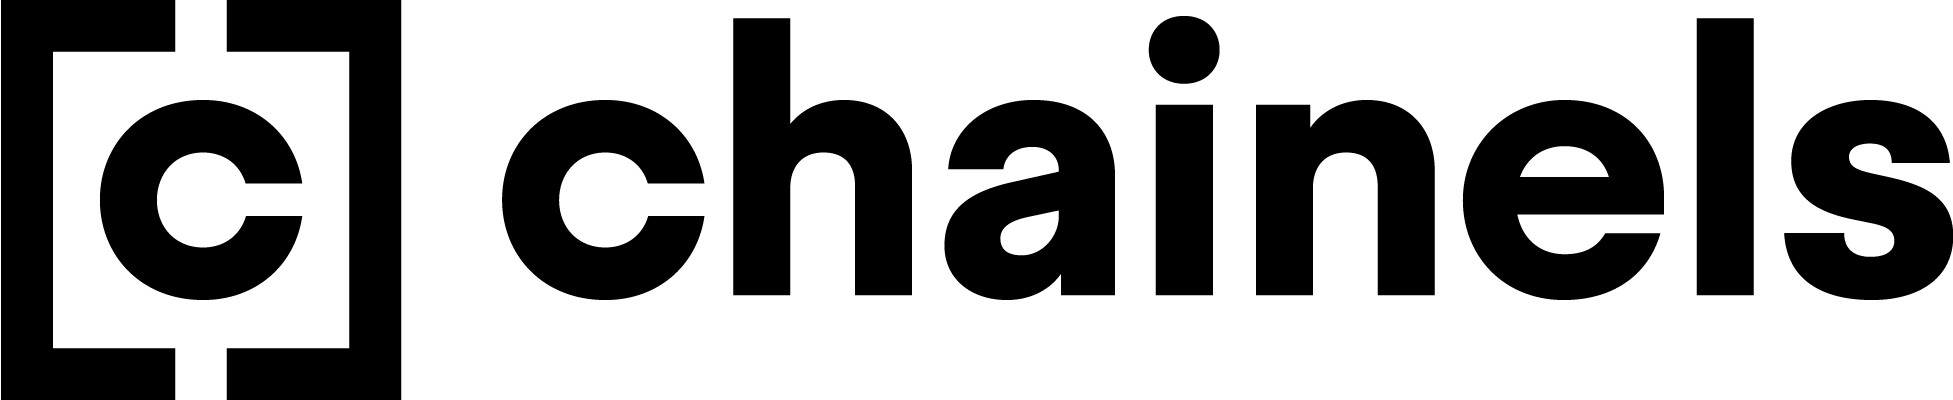 chainels_logo_black-1